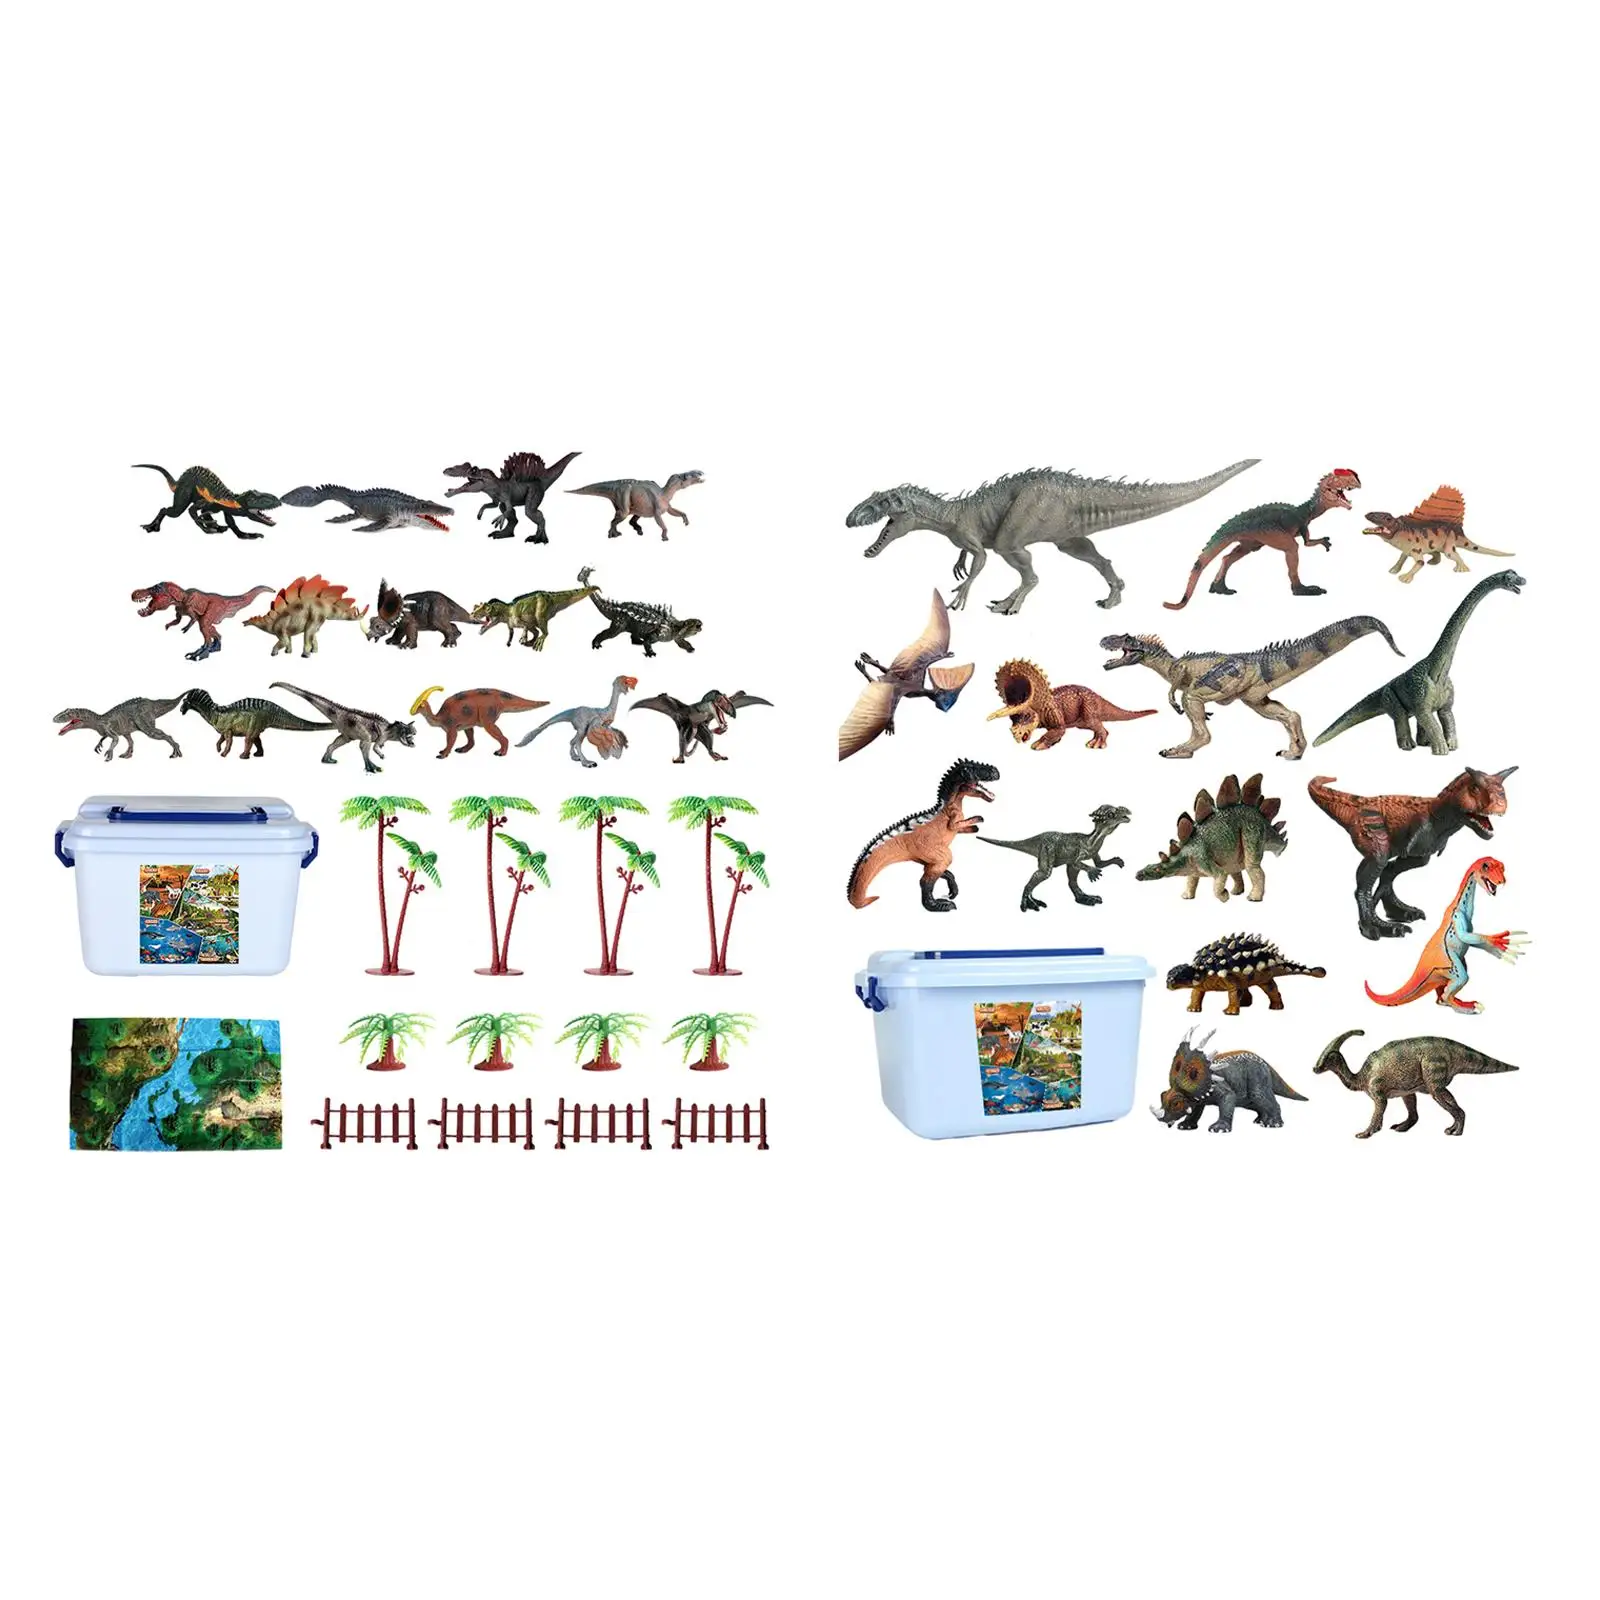 15 Pieces Dinosaur Toys Dinosaur Figures Playset for Festivals New Year